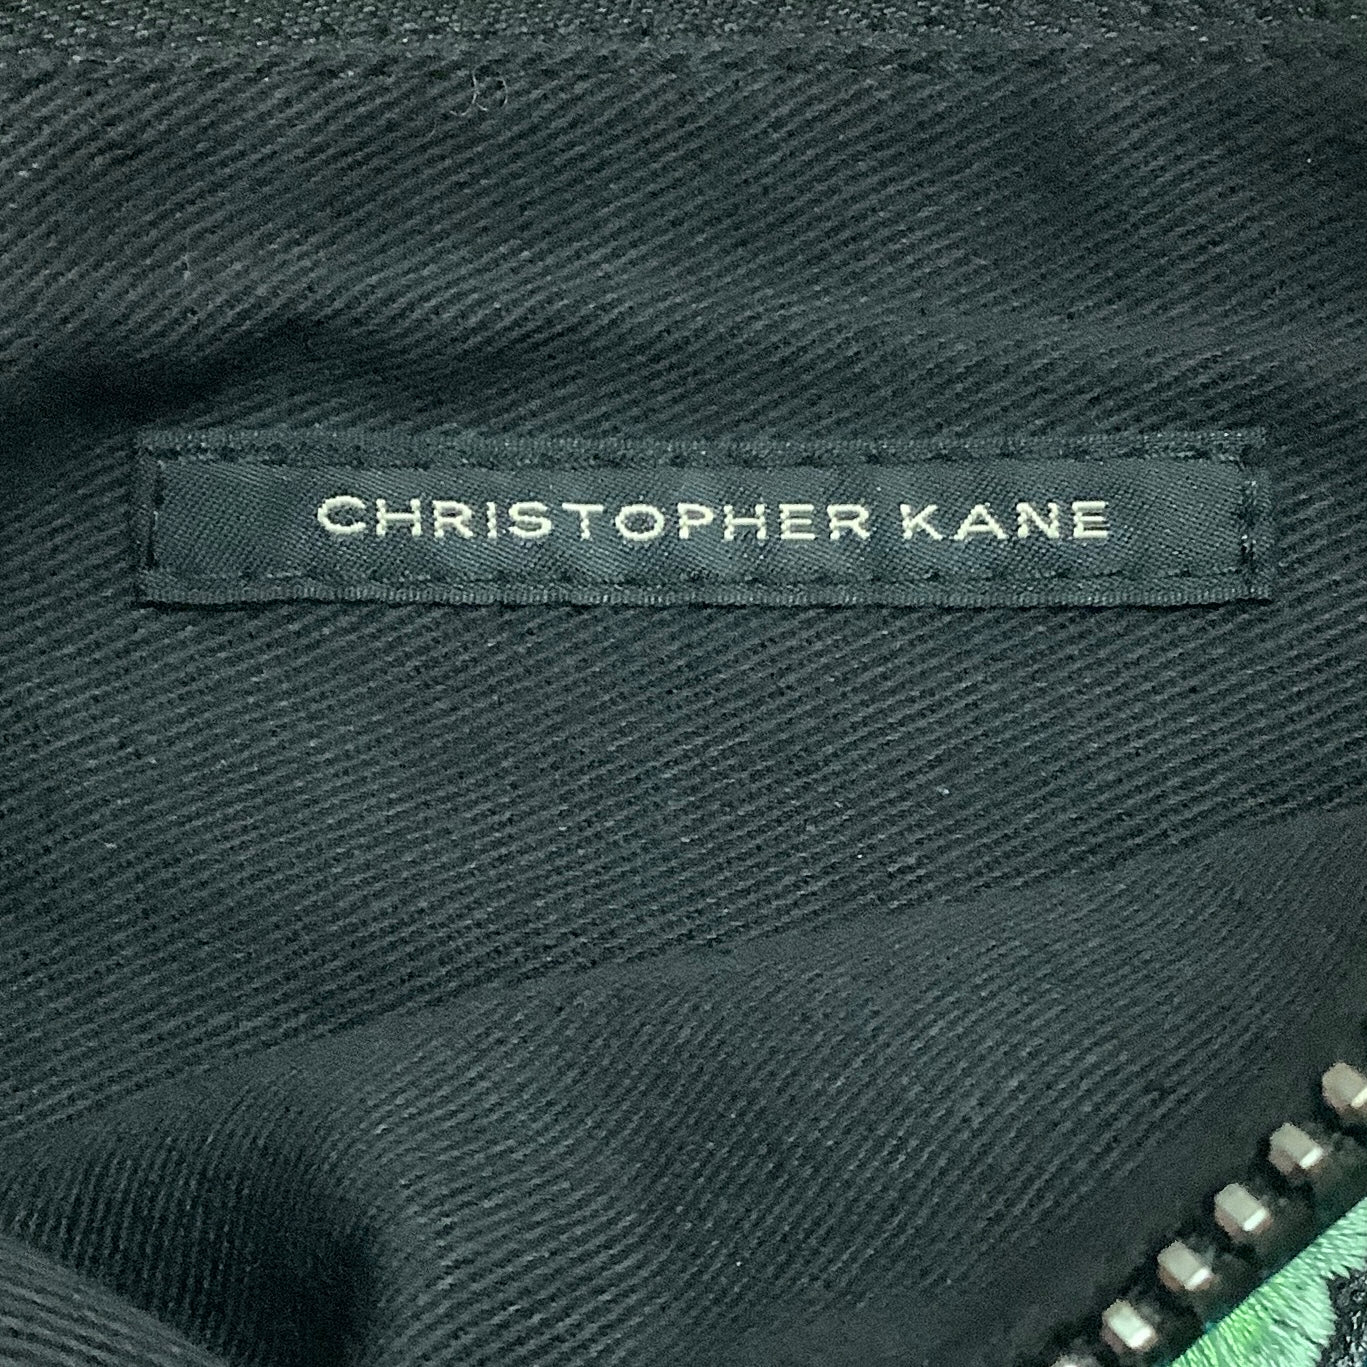 Christopher Kane Black Multi Floral Embroidered Leather Wristlet